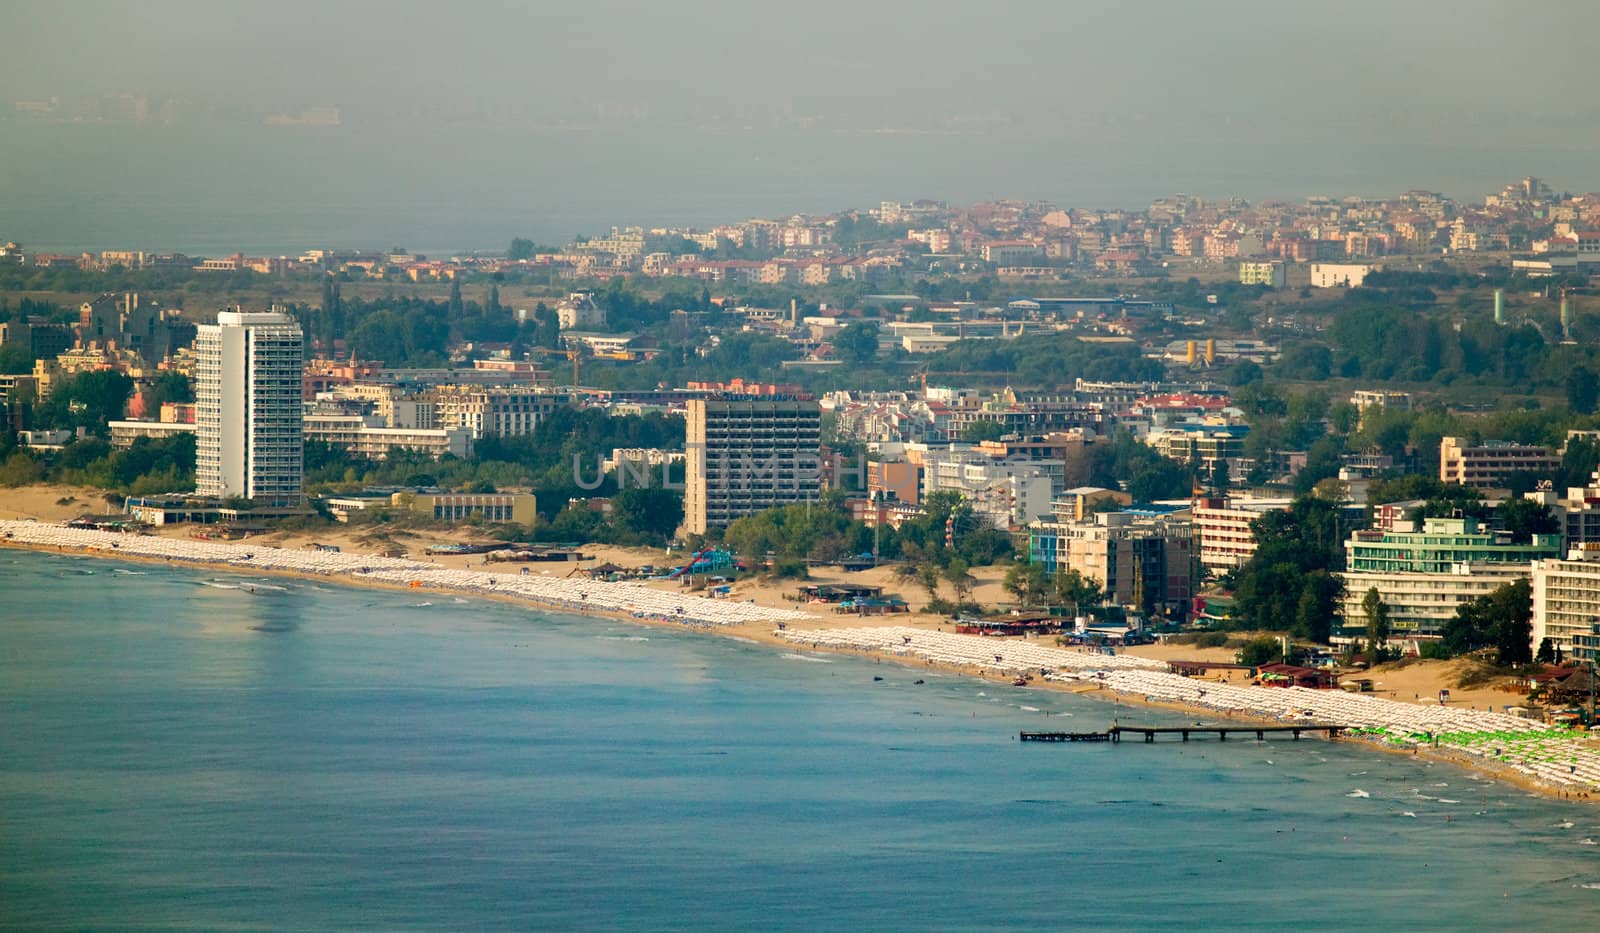 Sunny beach holiday resort - Bulgaria by ecobo